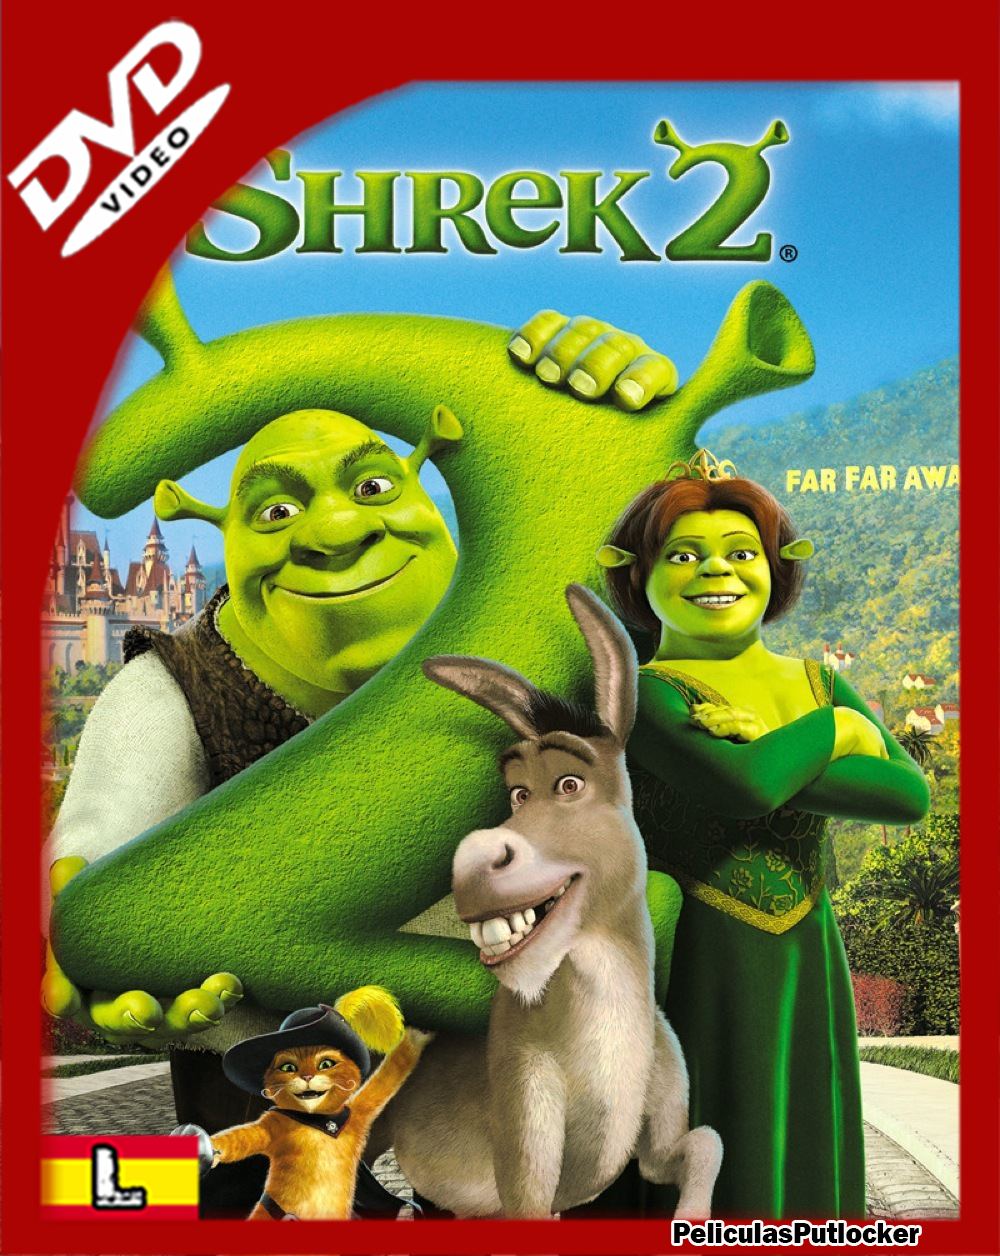 Shrek 2 [DVDRip] [Latino] [MG-FD] 